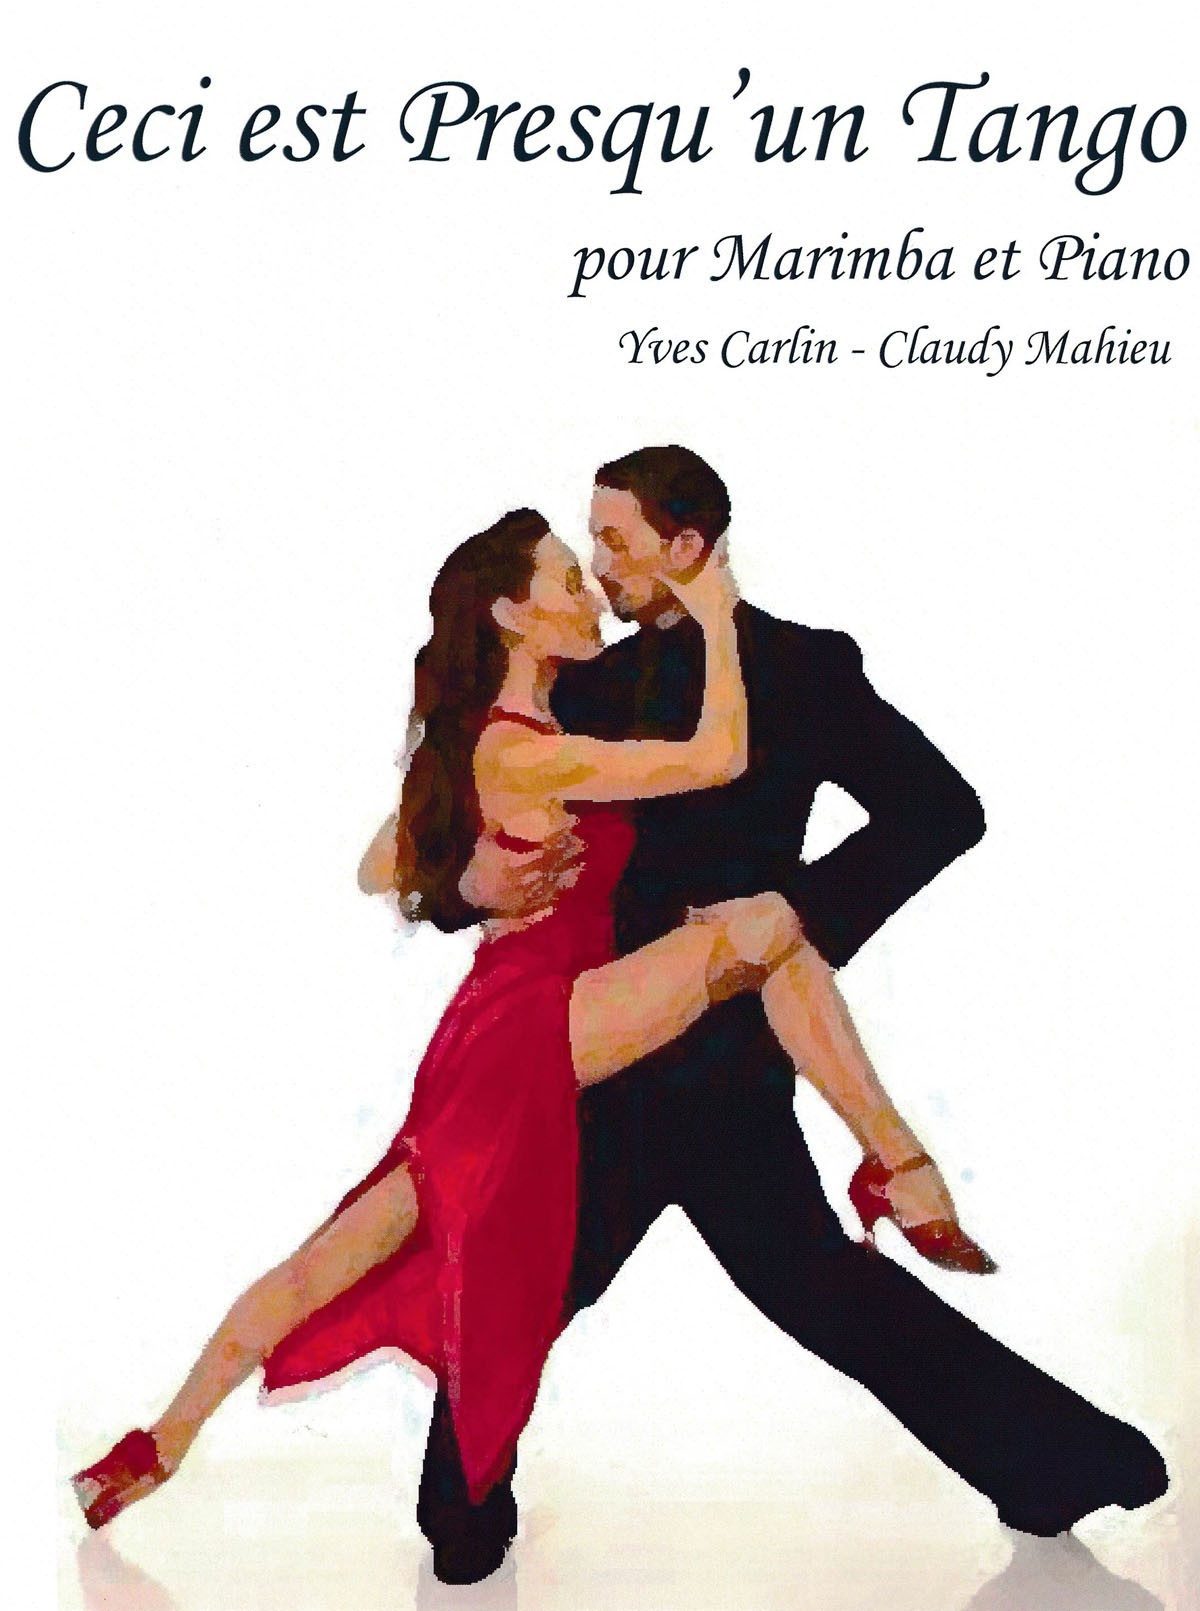 Ceci est Presqu'un Tango by Yves Carlin & Claudy Mahieu